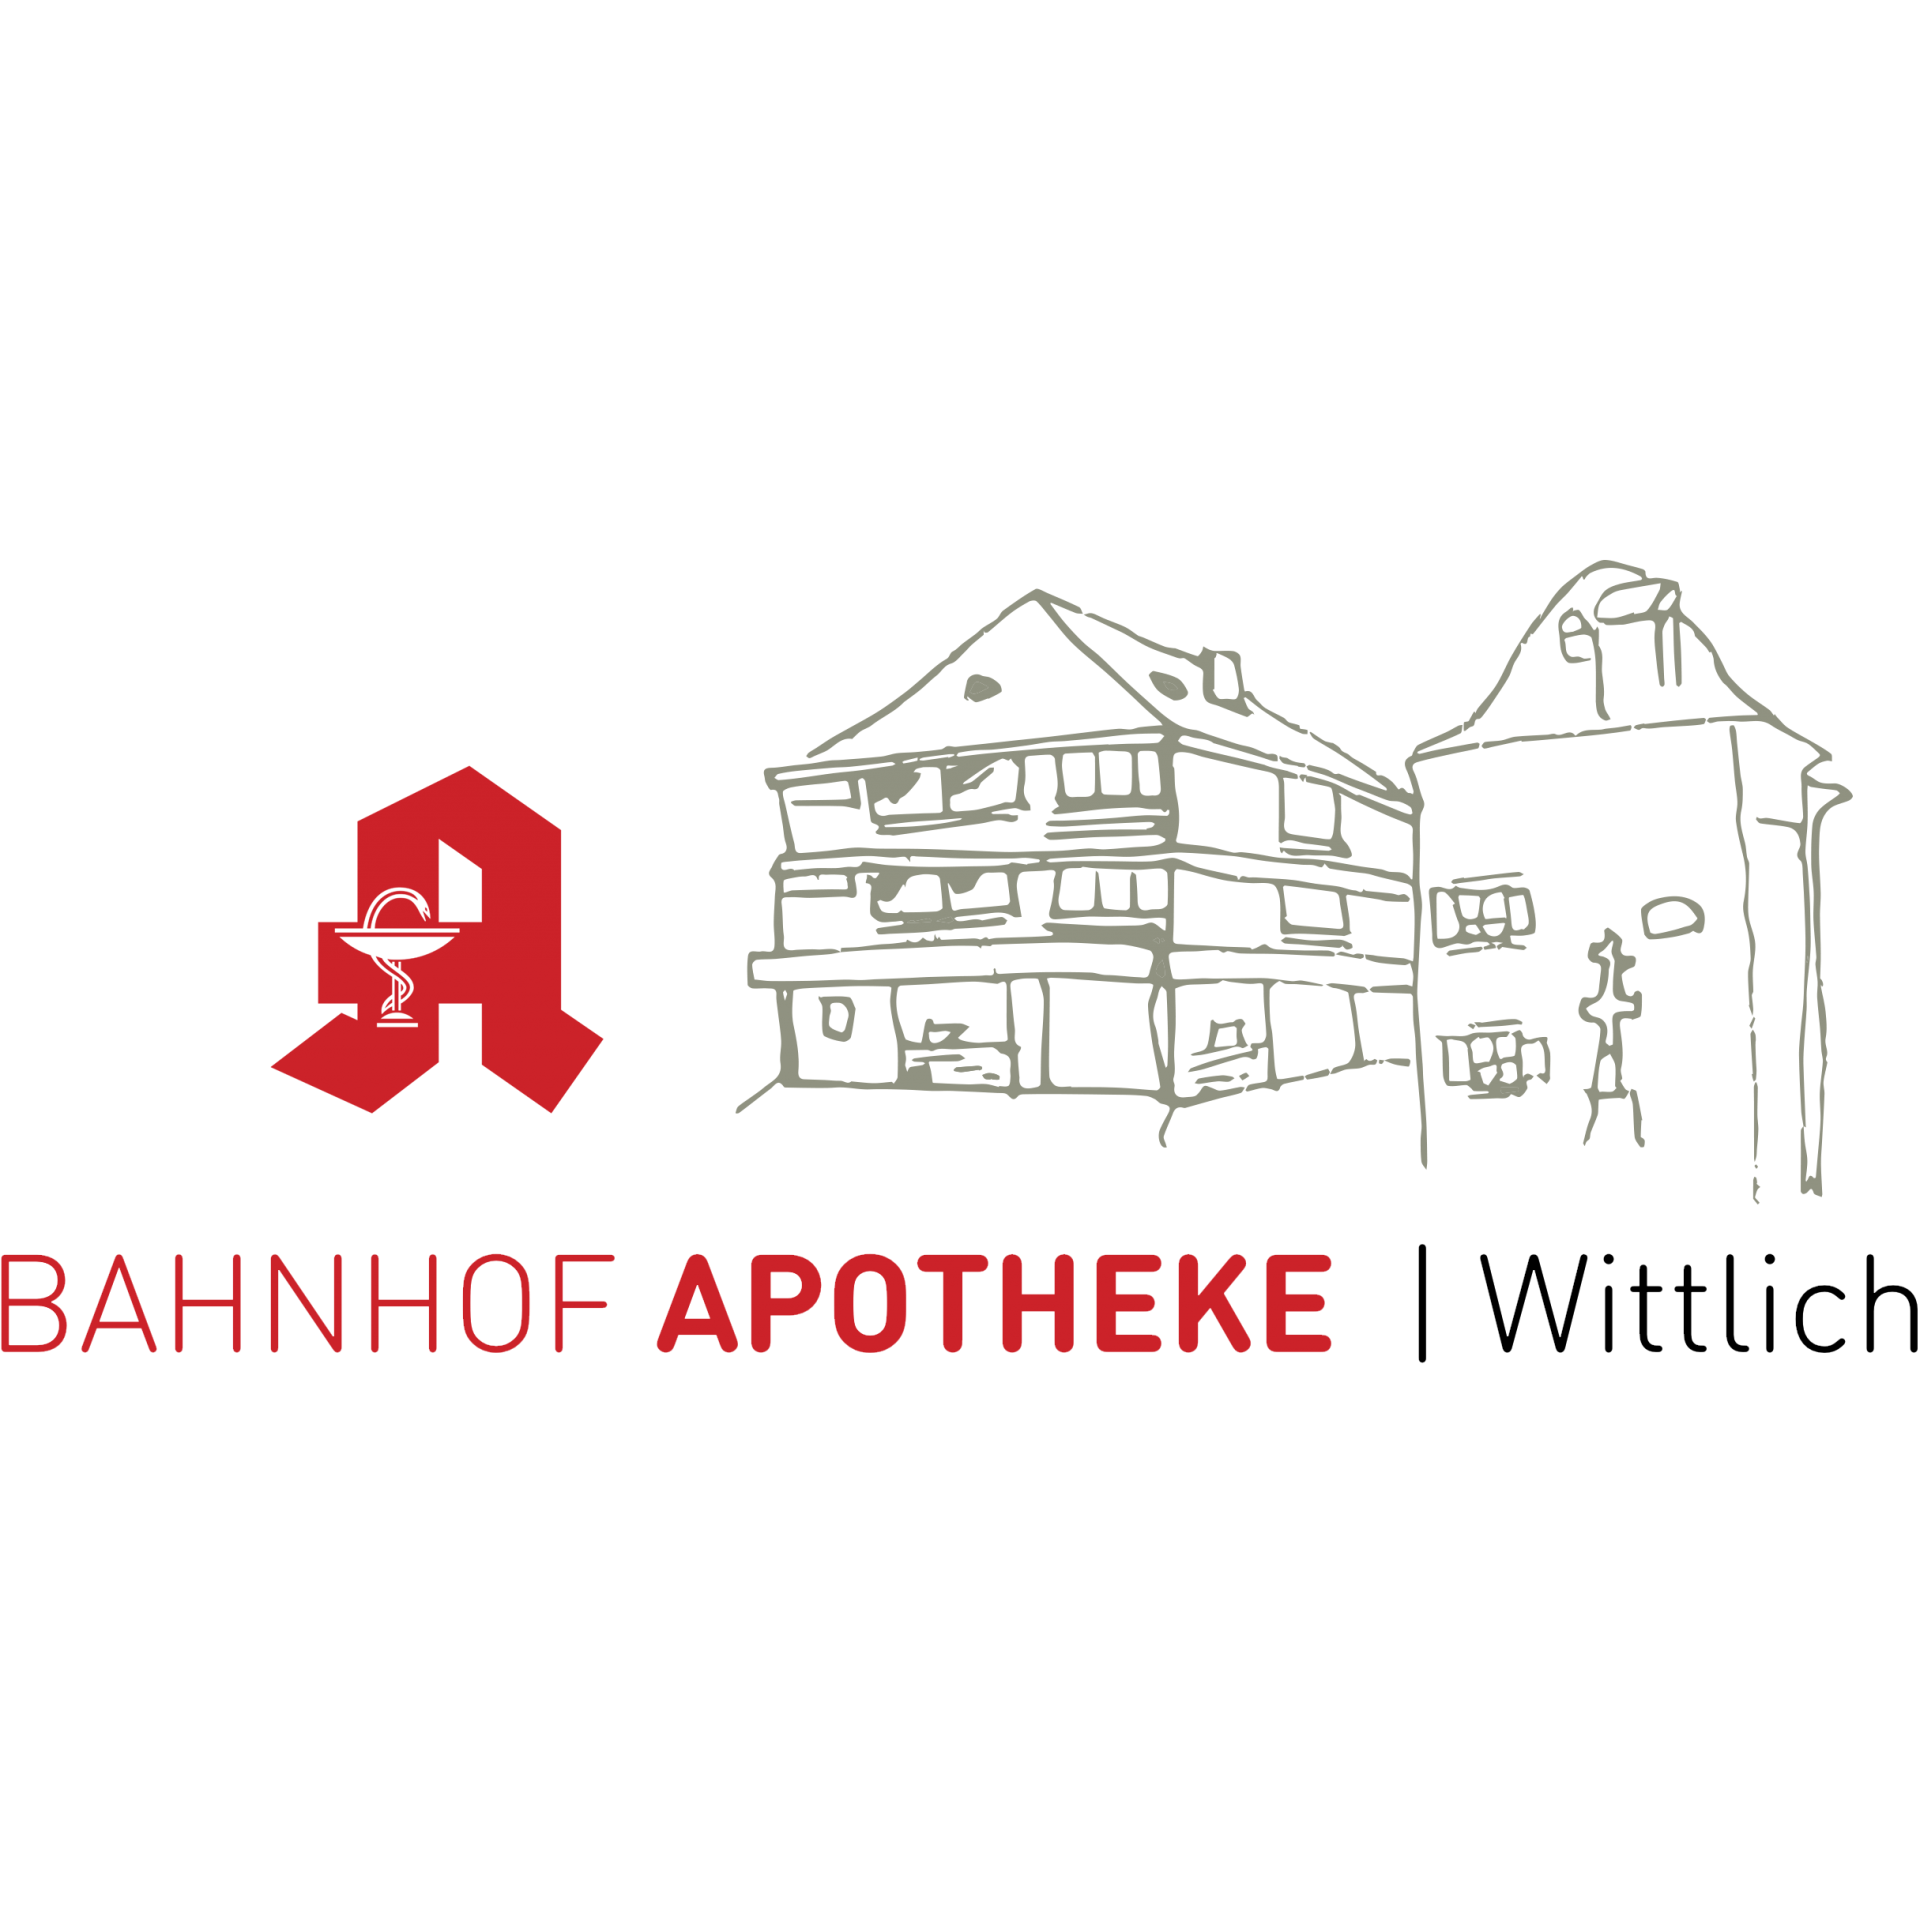 Logo der Bahnhof-Apotheke